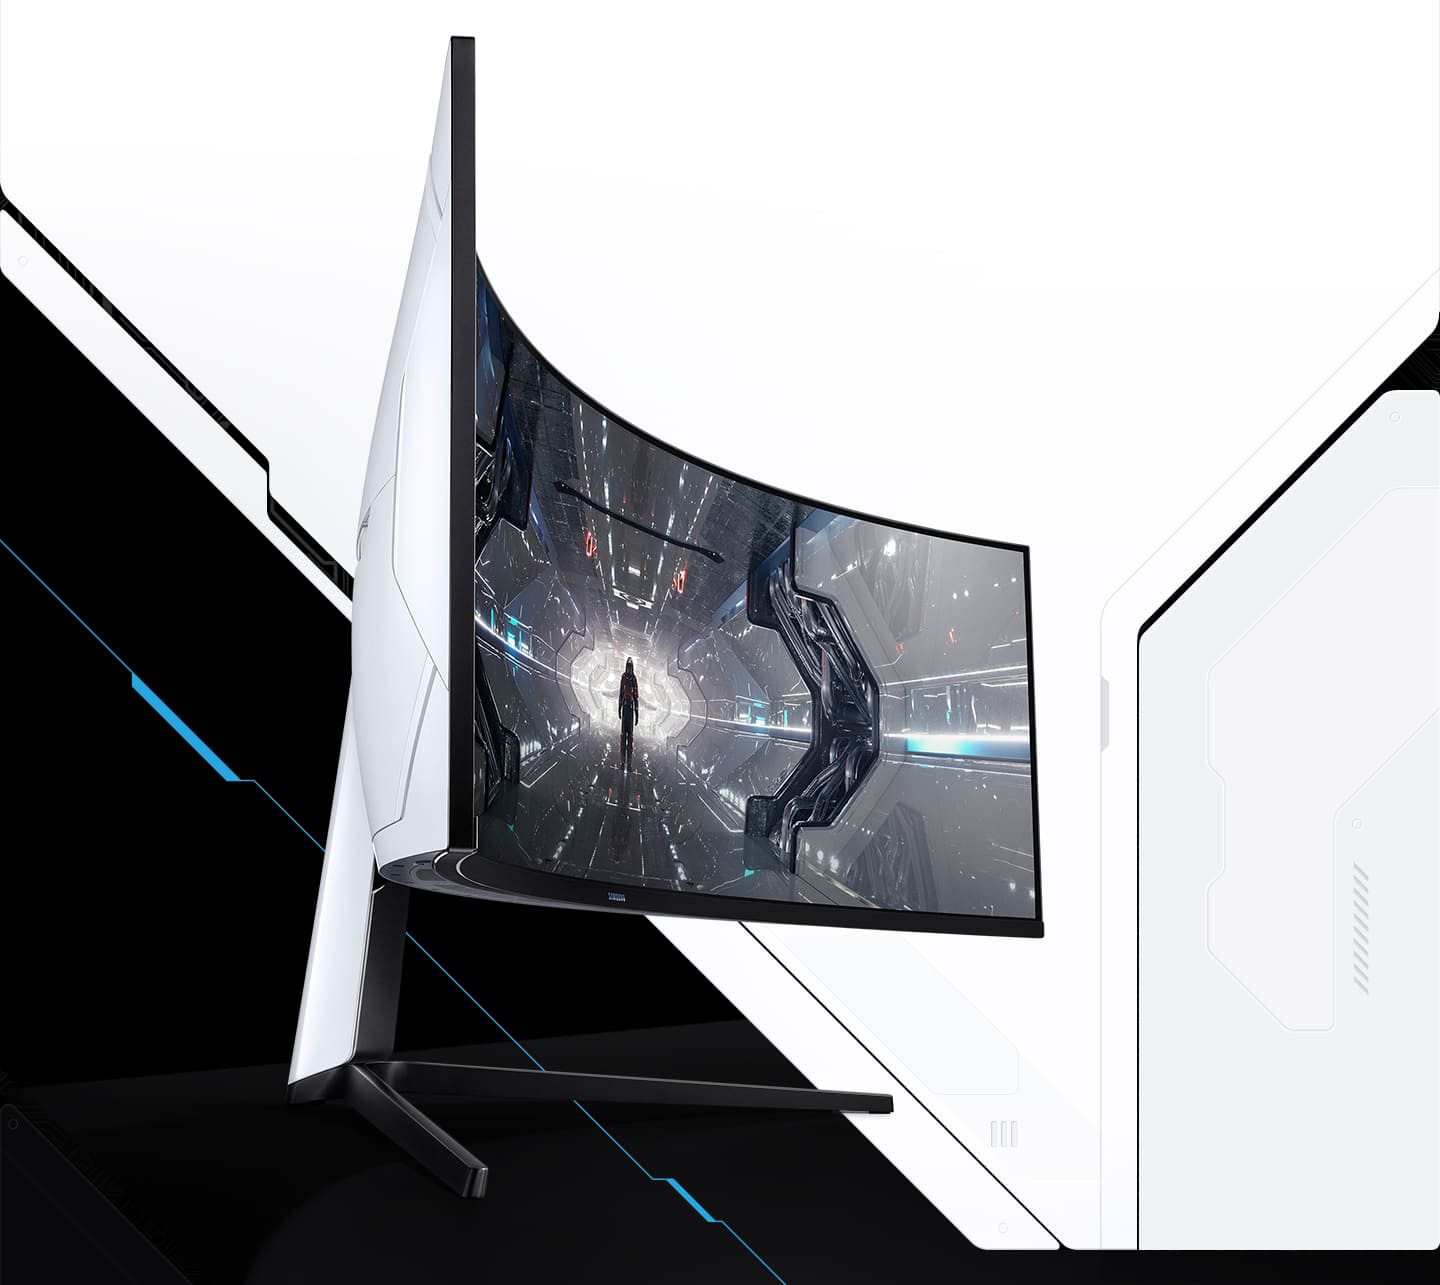 SAMSUNG Odyssey G9 Series Gaming Monitor